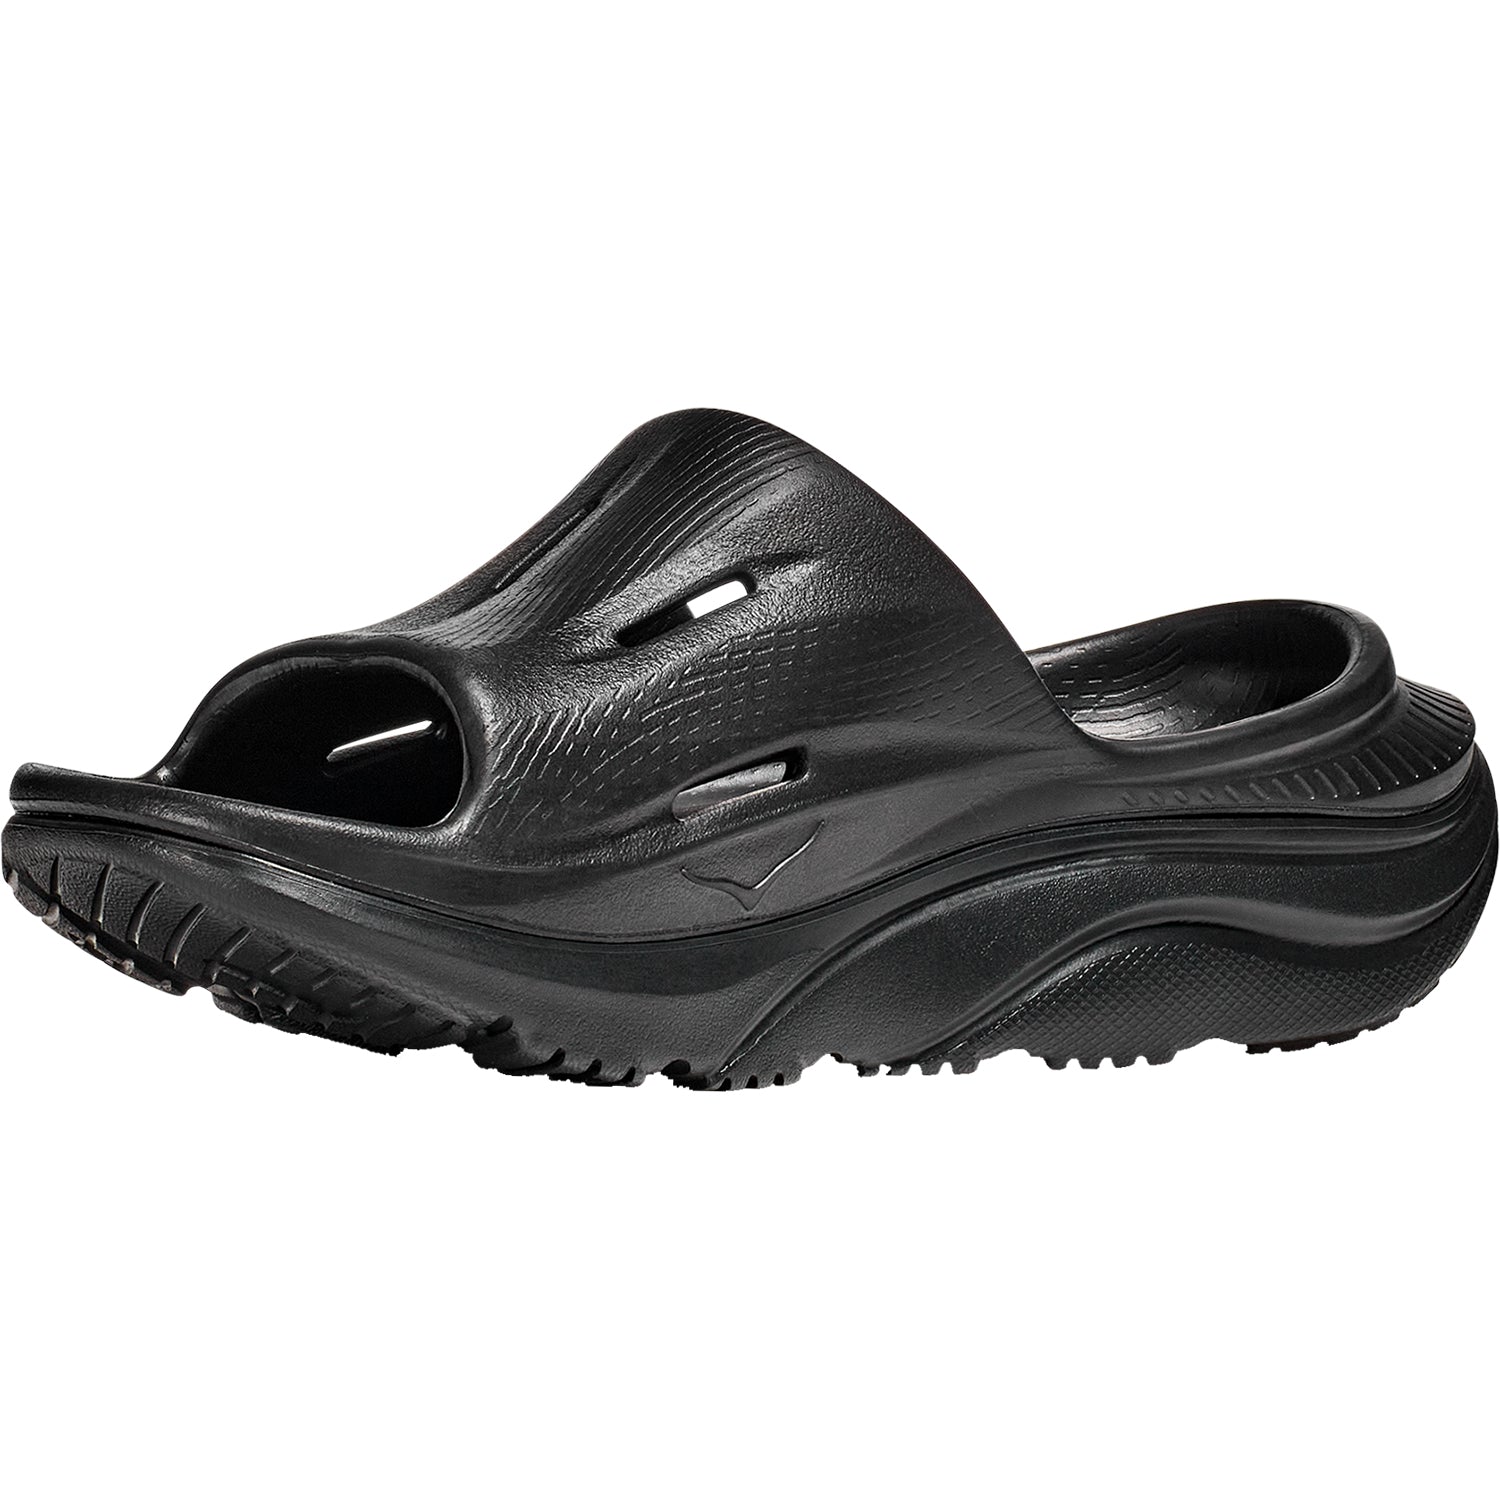 Hoka Ora Recovery Slide 3 | Unisex Sandals | Footwear etc.